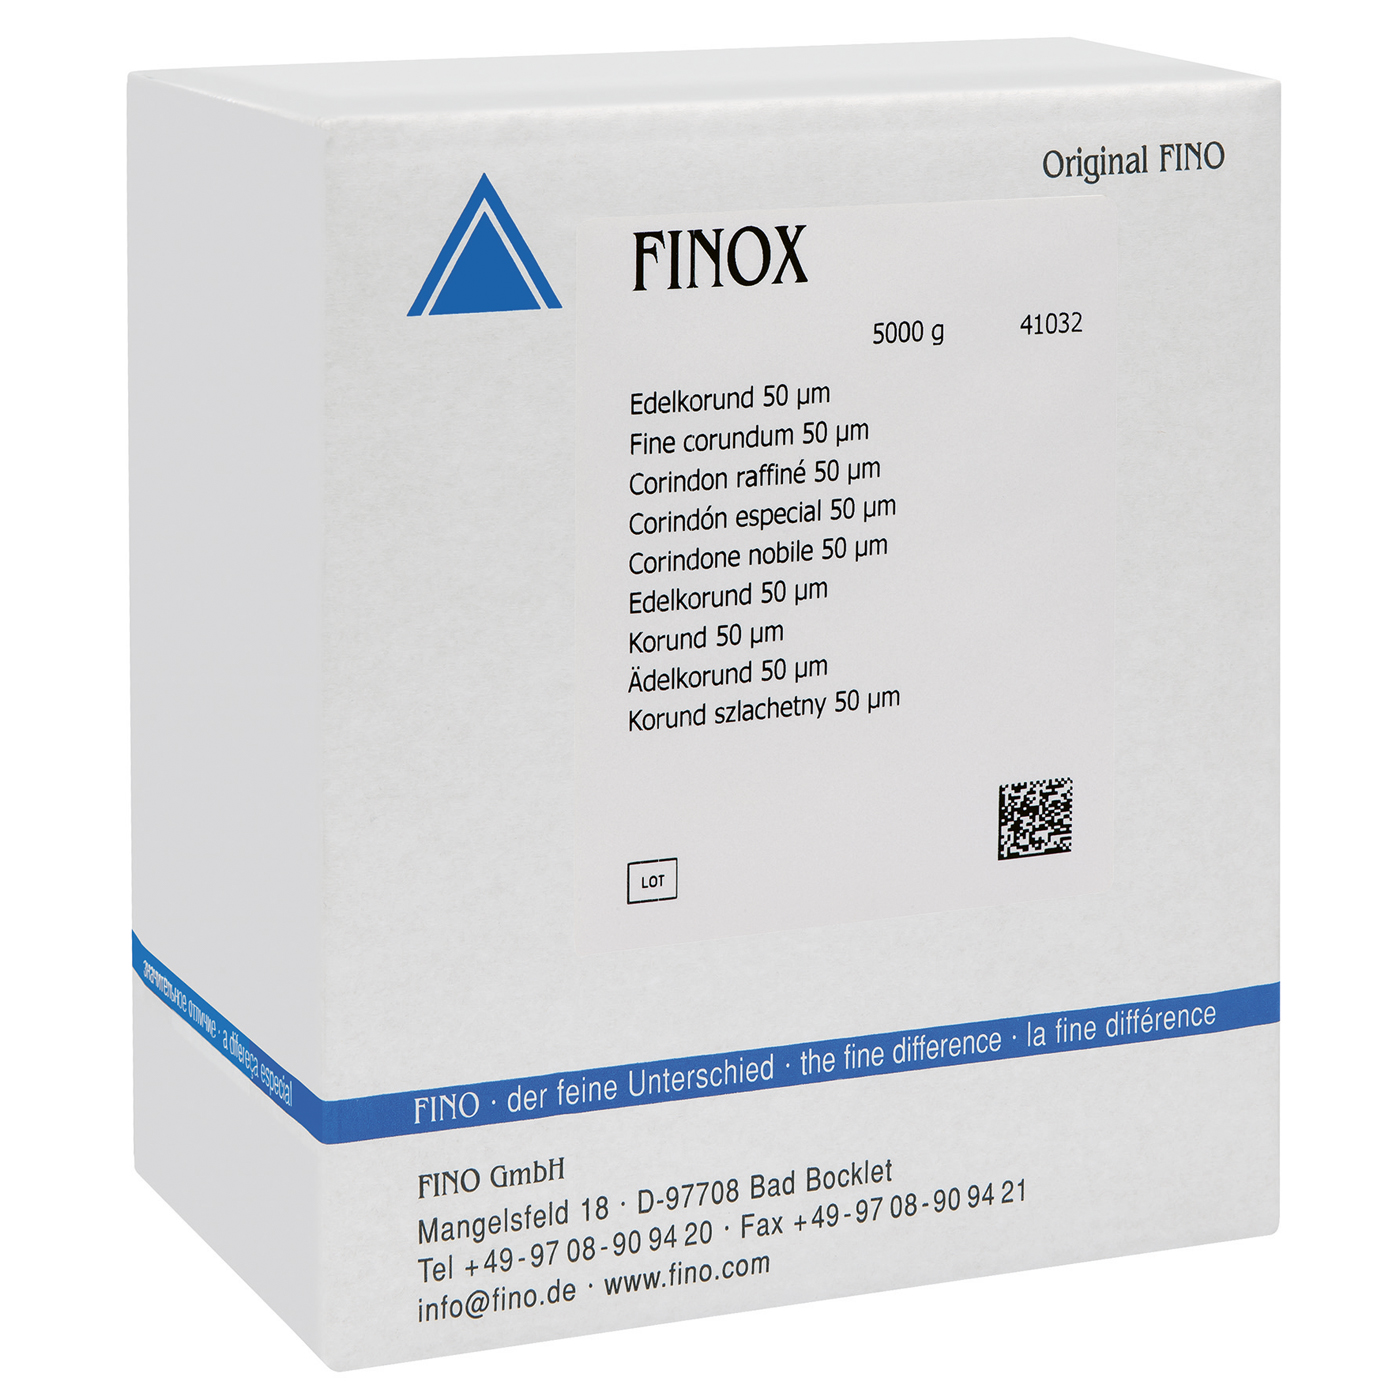 FINOX High-Grade Corundum, 50 µm - 5000 g